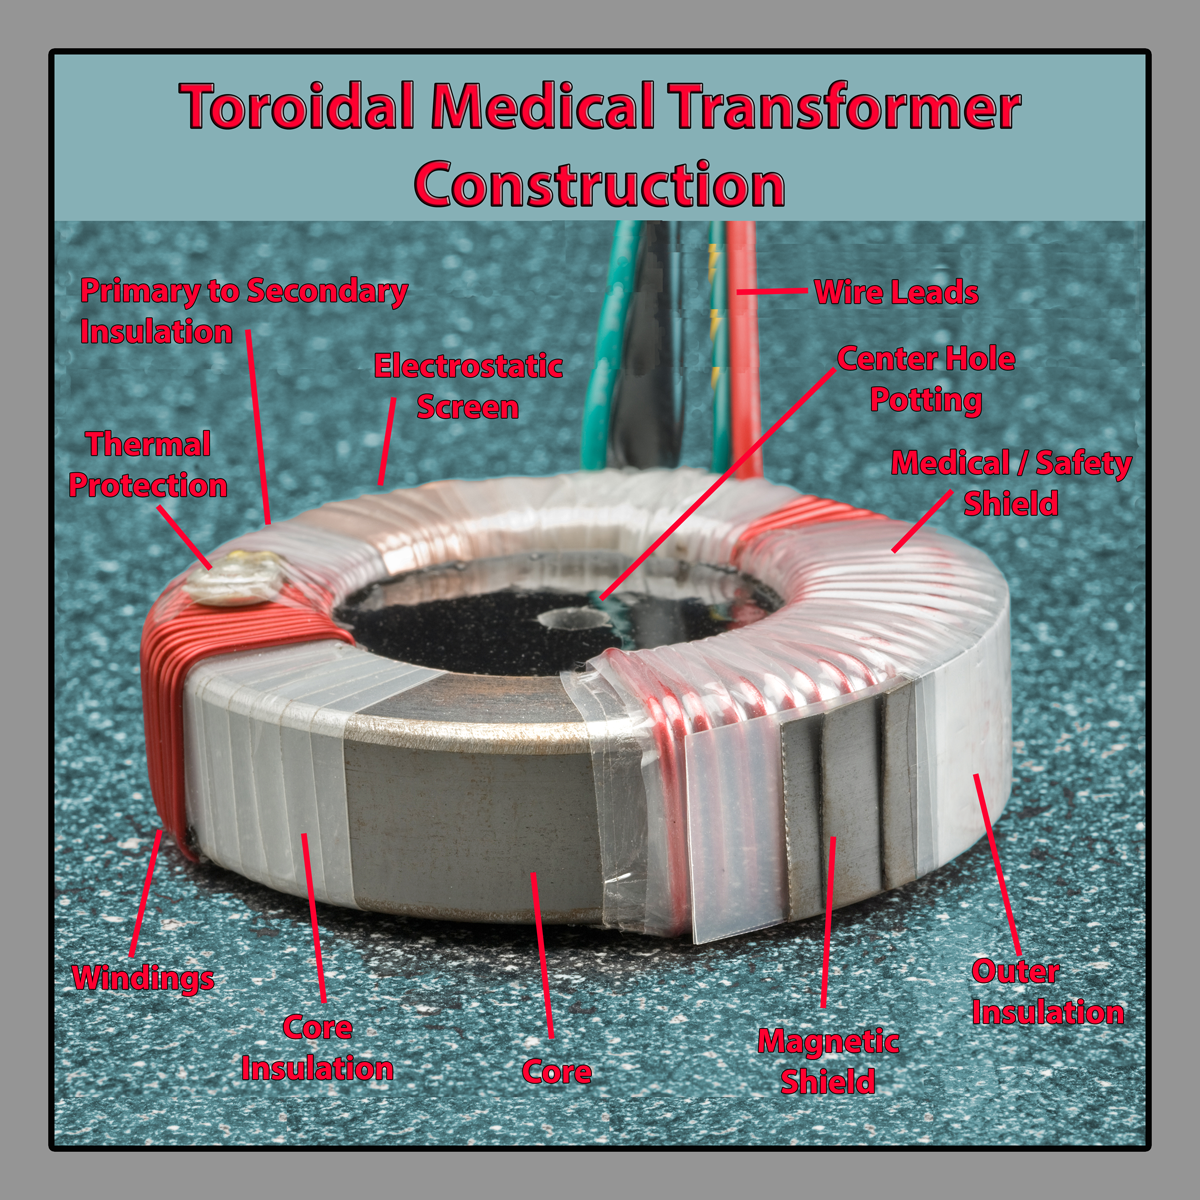 Toroidal medical transformer construction